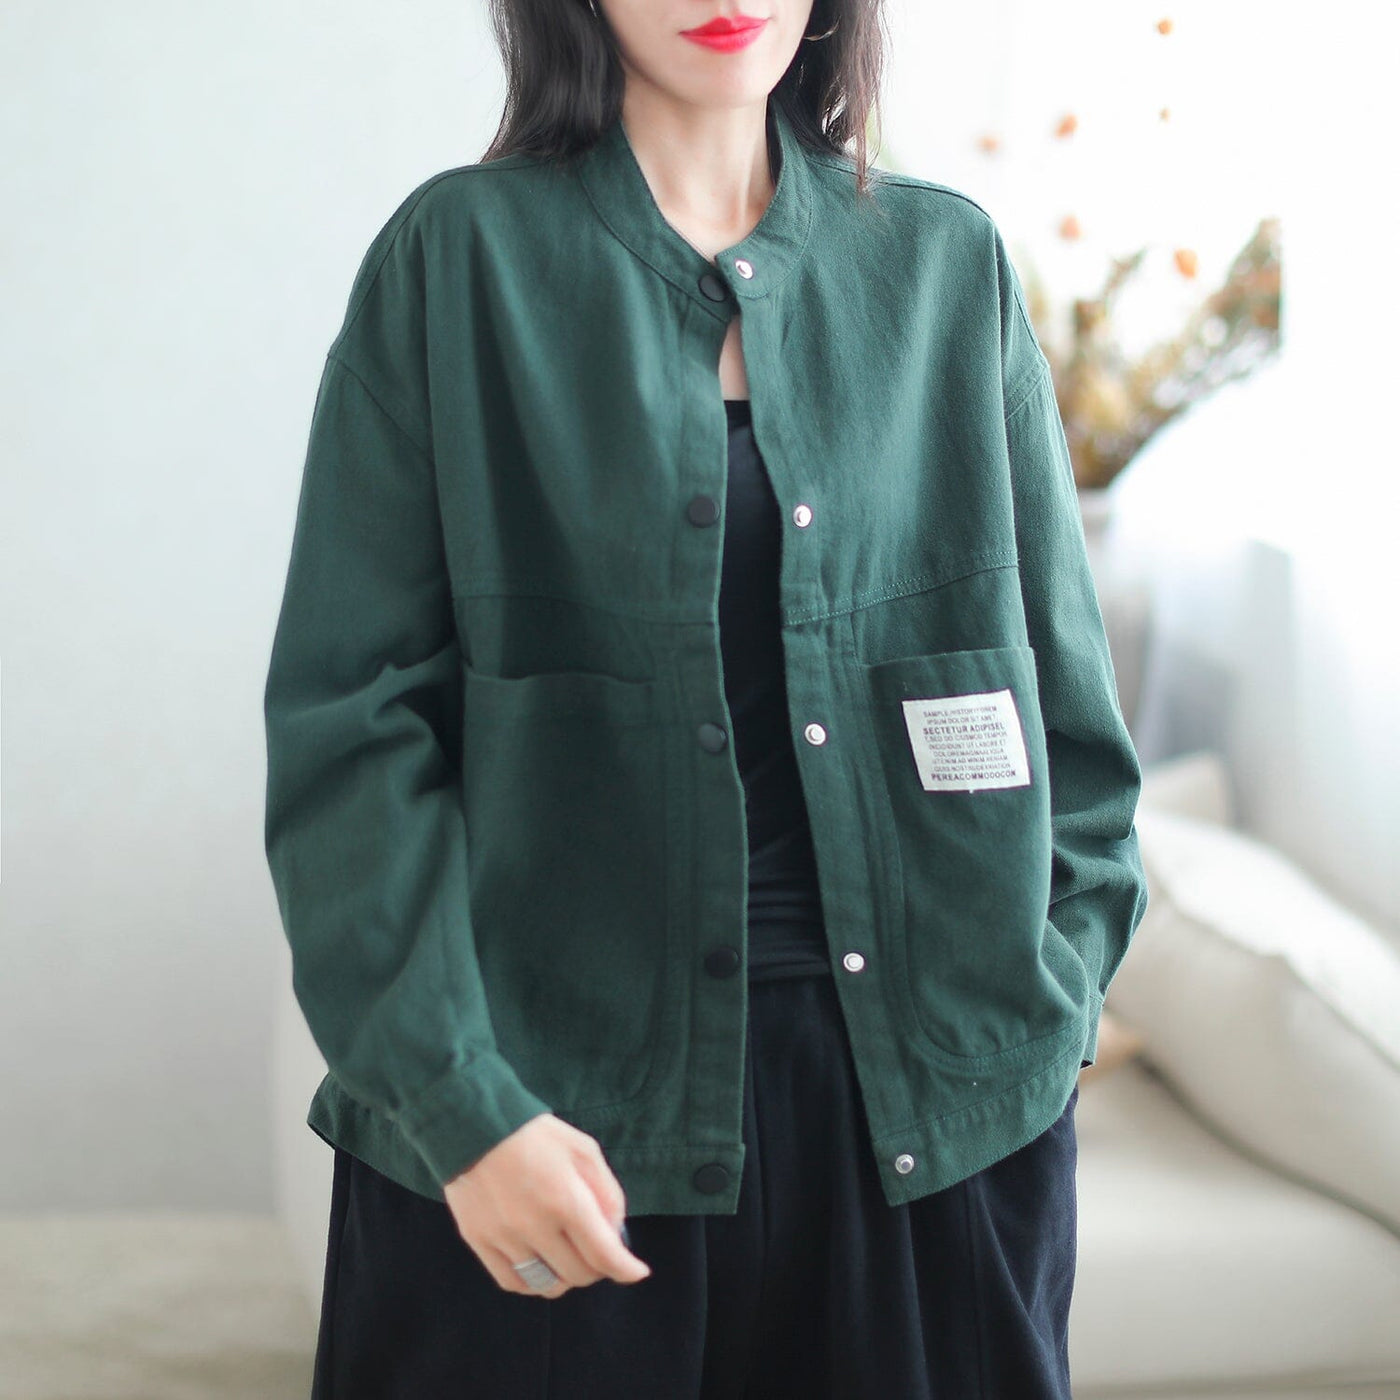 Women Stylish Casual Fashion Loose Jacket